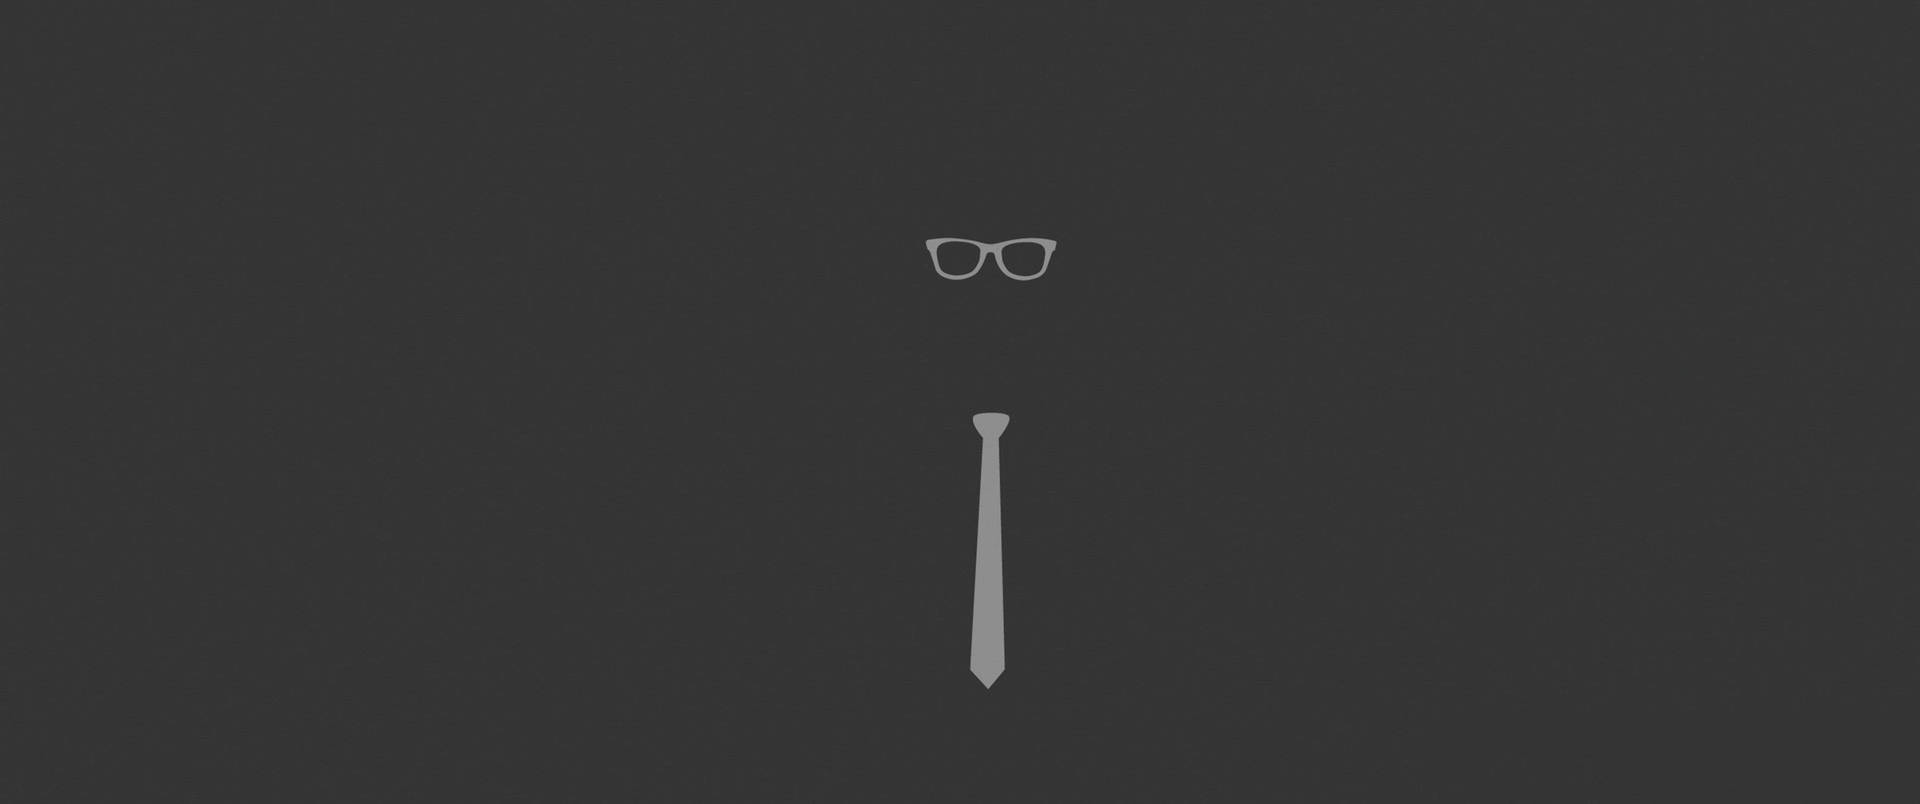 3440x1440 Minimalist Eyeglass And Tie Wallpaper